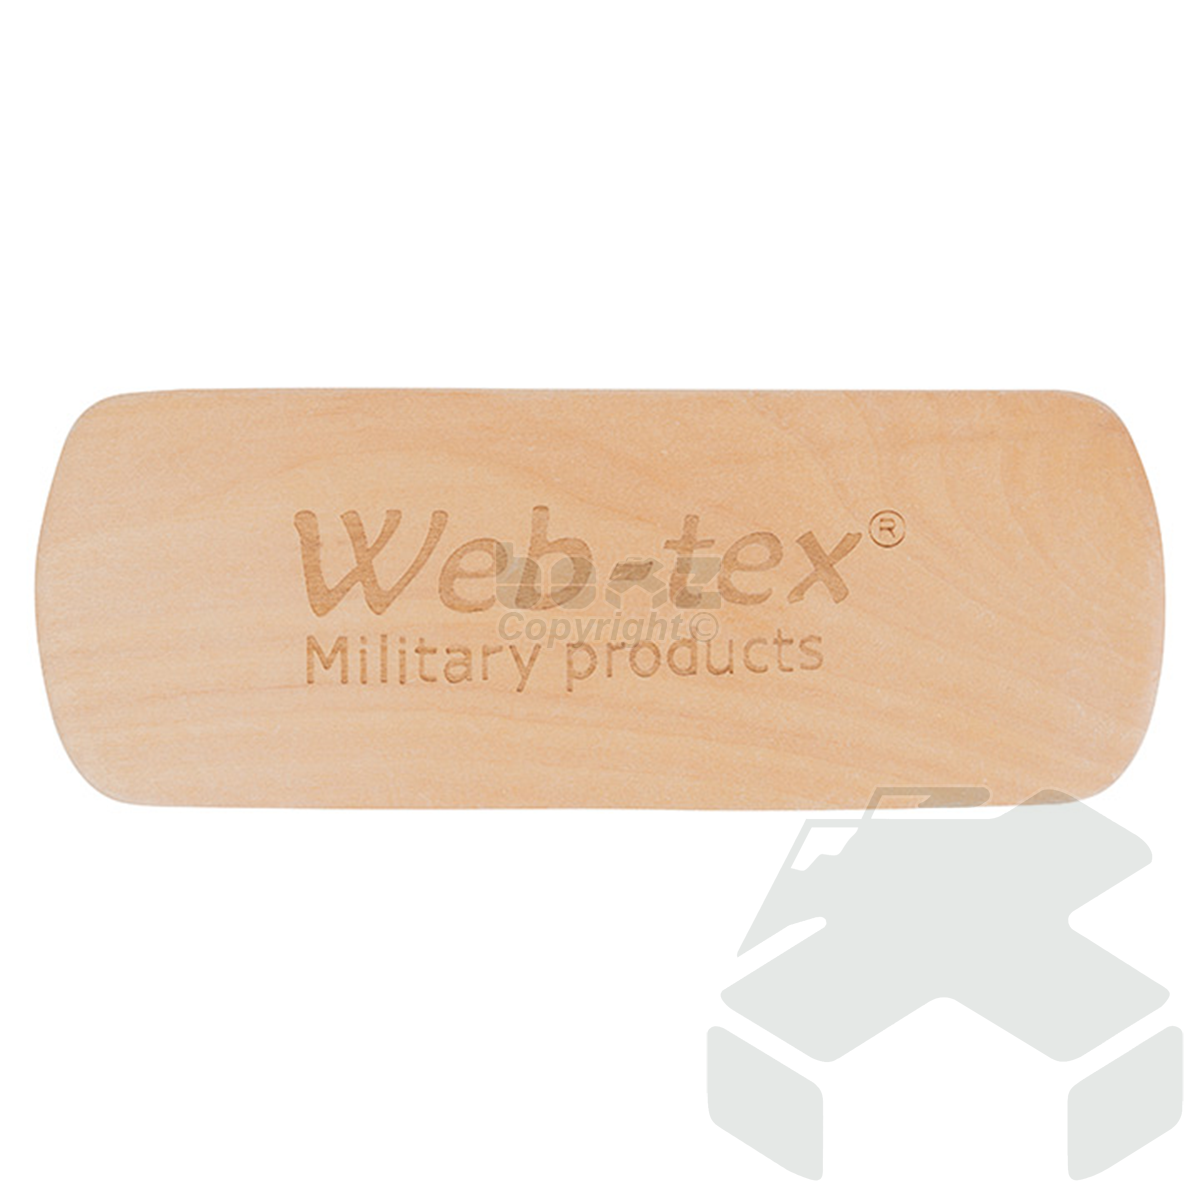 Web-Tex Boot Brush